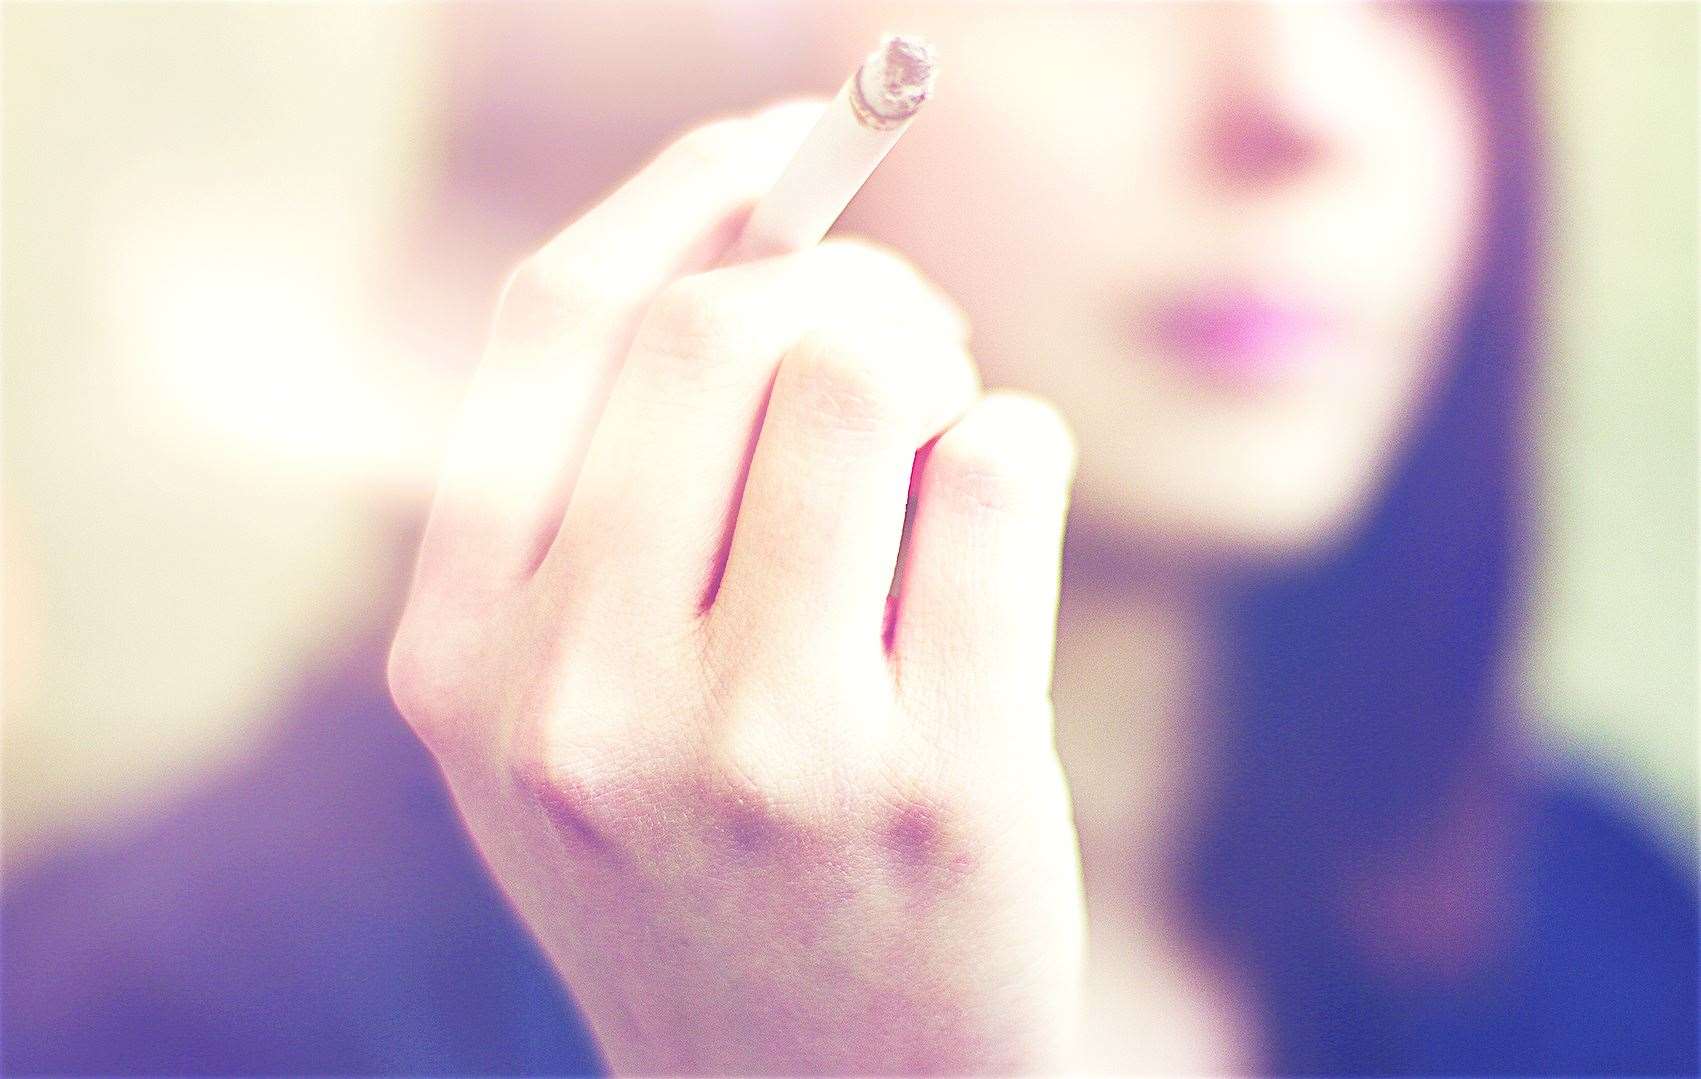 Experts warn that smoking shisha is equally as bad as smoking cigarettes